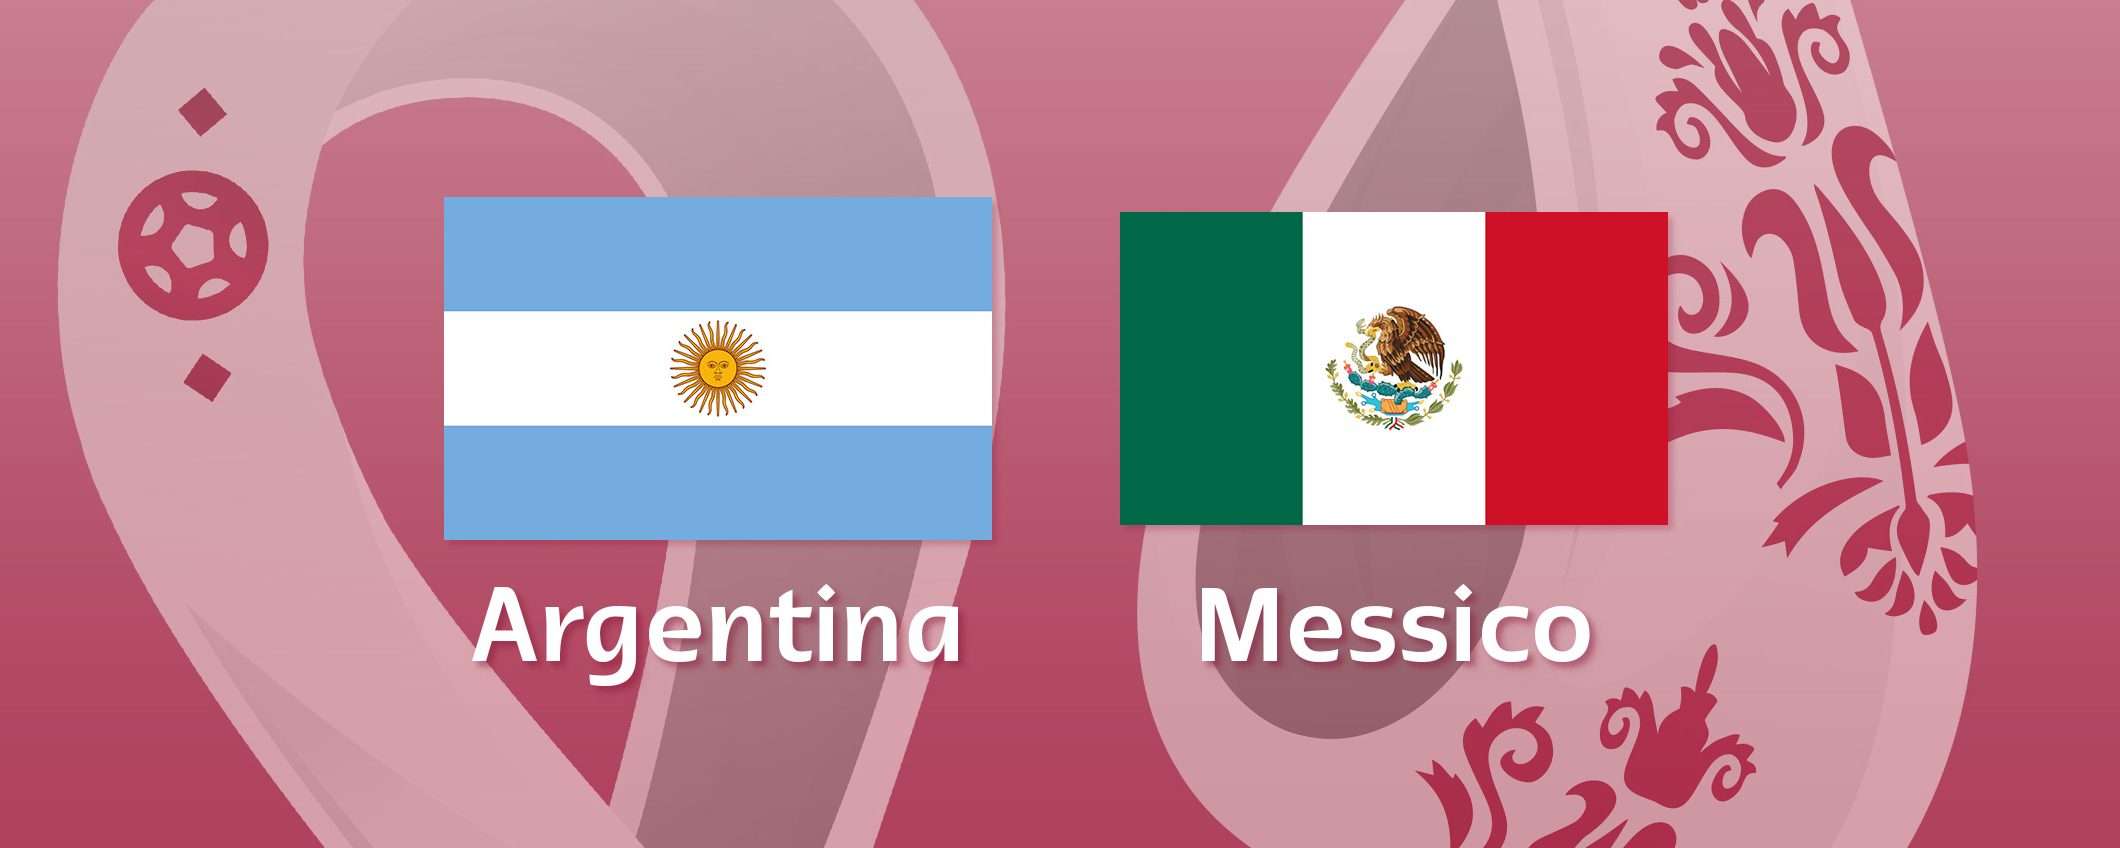 Come vedere Argentina-Messico in streaming